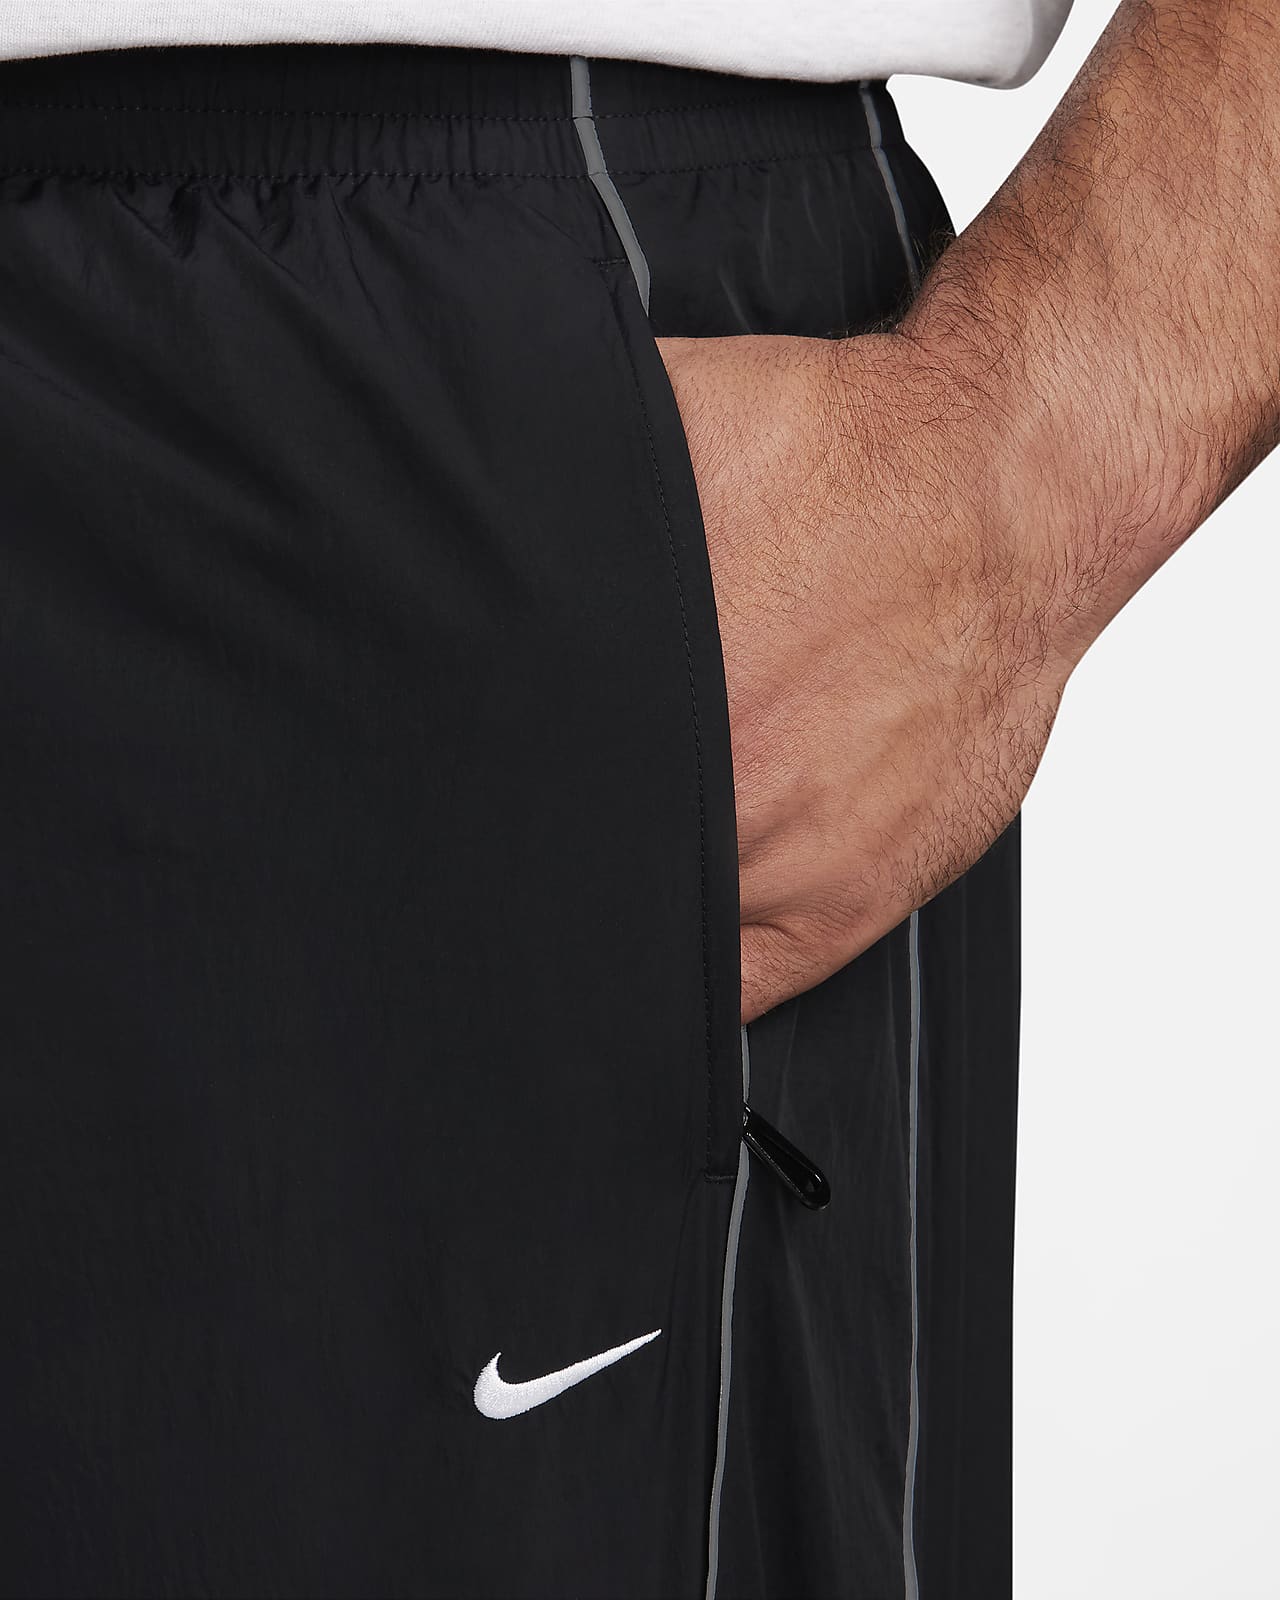 Solo Swoosh Men's Track Pants. Nike.com